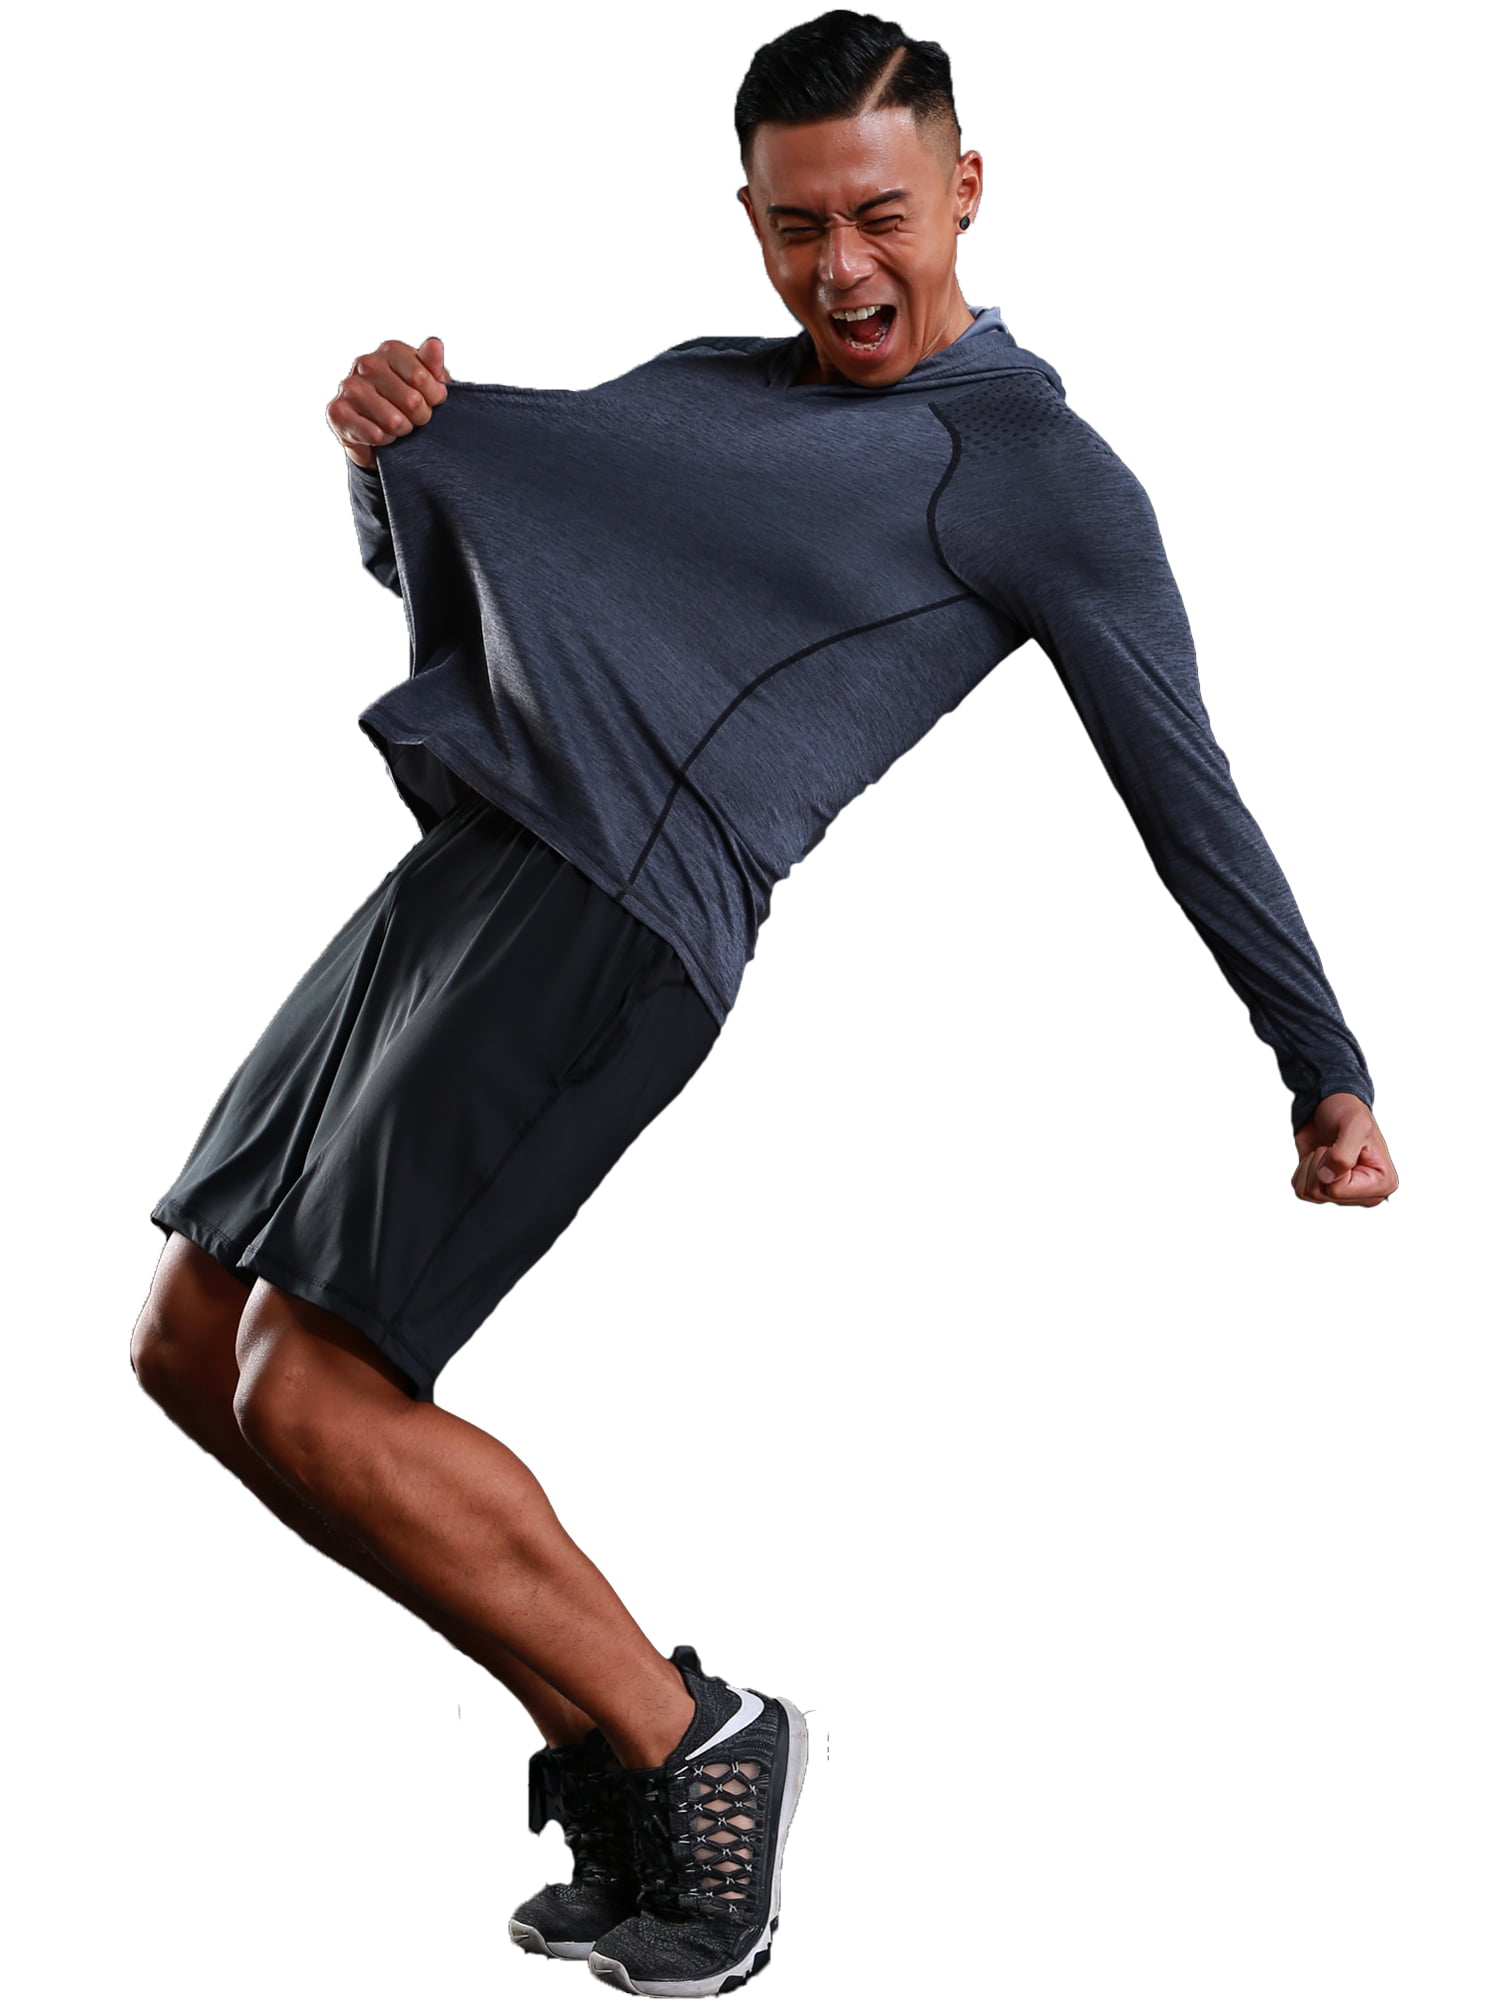 Magiftbox Mens Long Sleeve Raglan Pullover Sweatshirts Lightweight Active Gym Workout T-Shirts T13